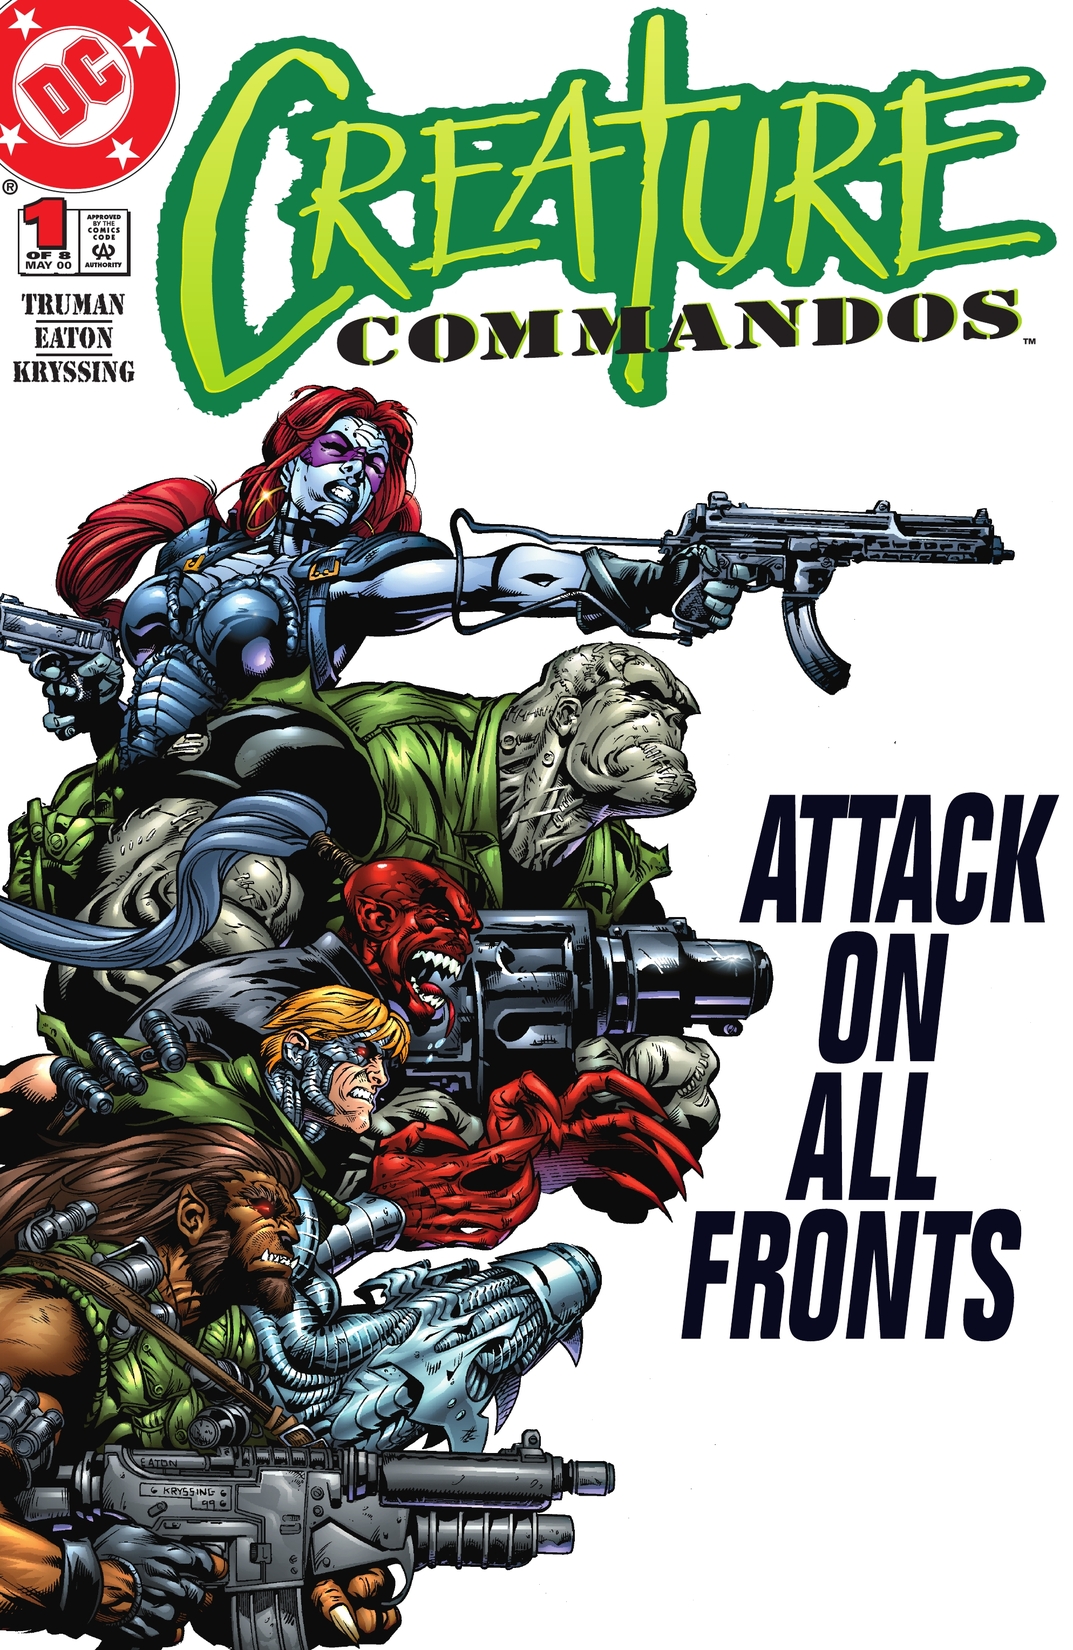 Creature Commandos #1 preview images